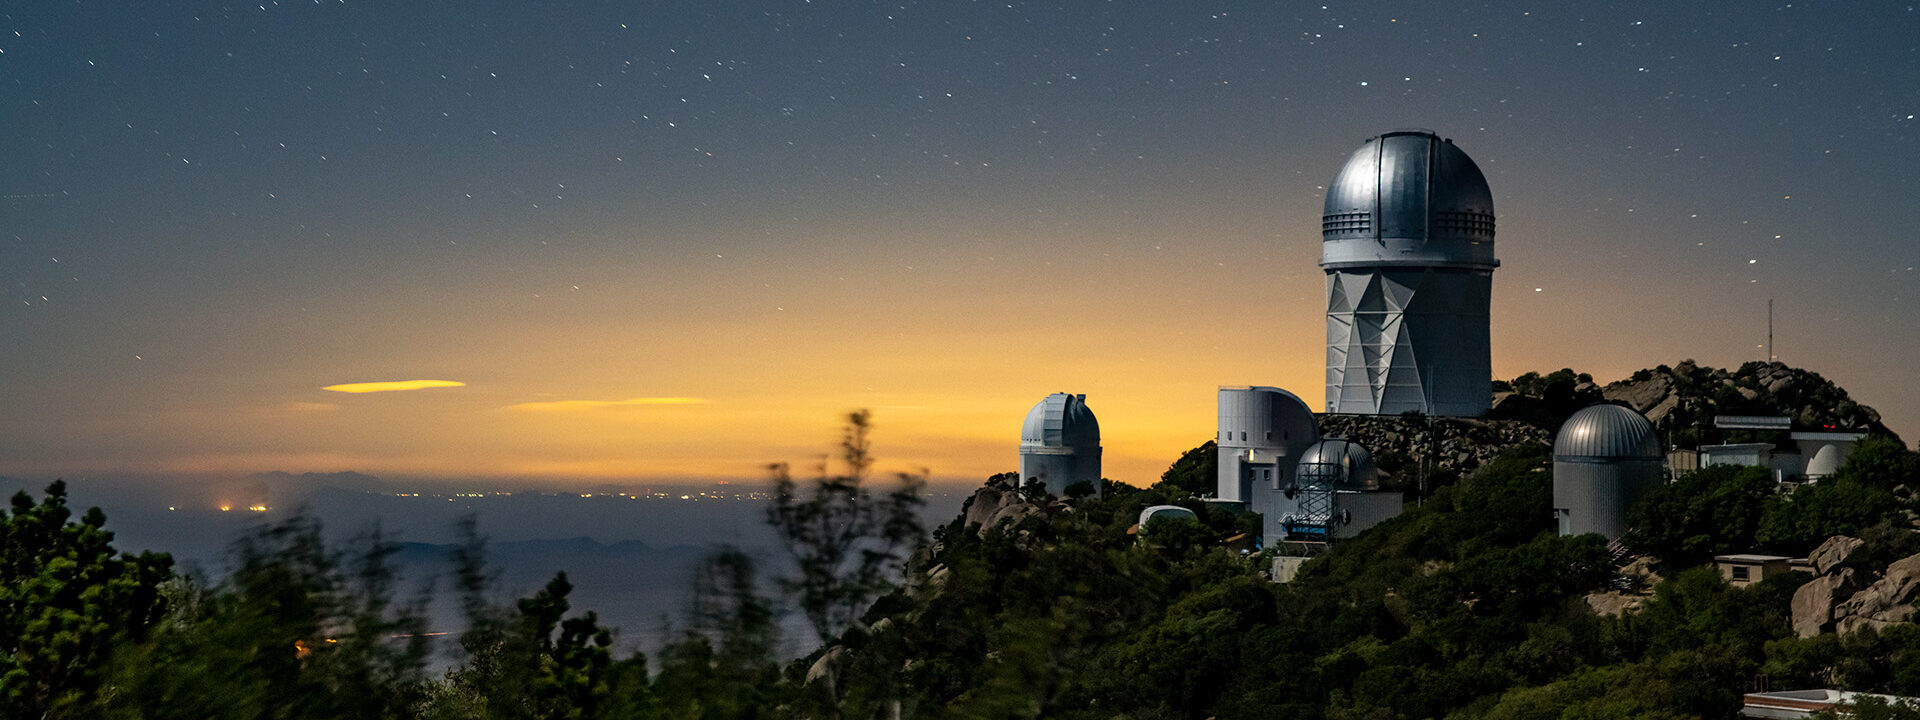 Mayall Telescope at dusk.